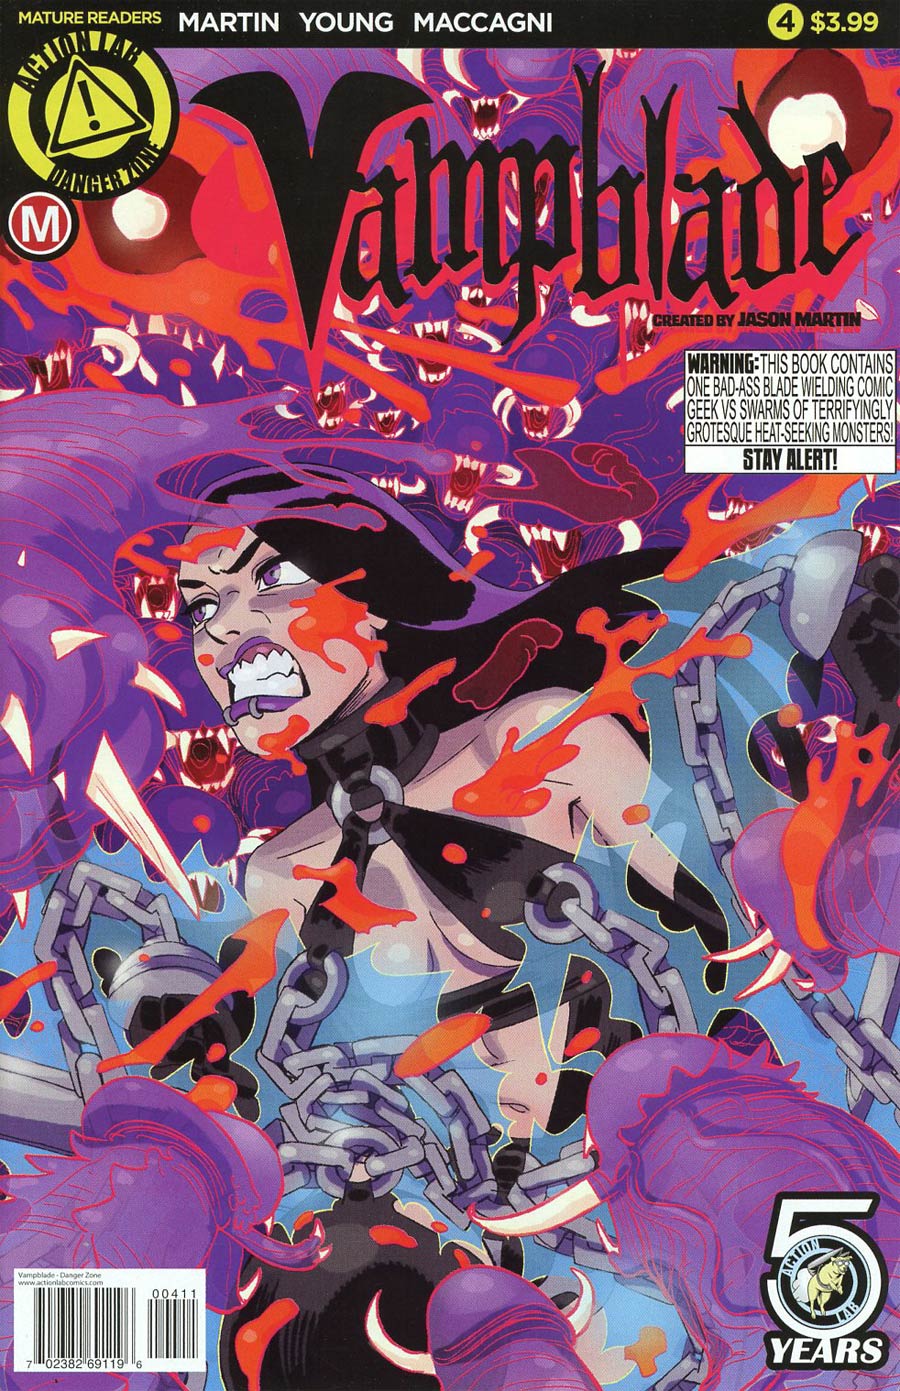 Vampblade #4 Cover A Regular Winston Young Cover